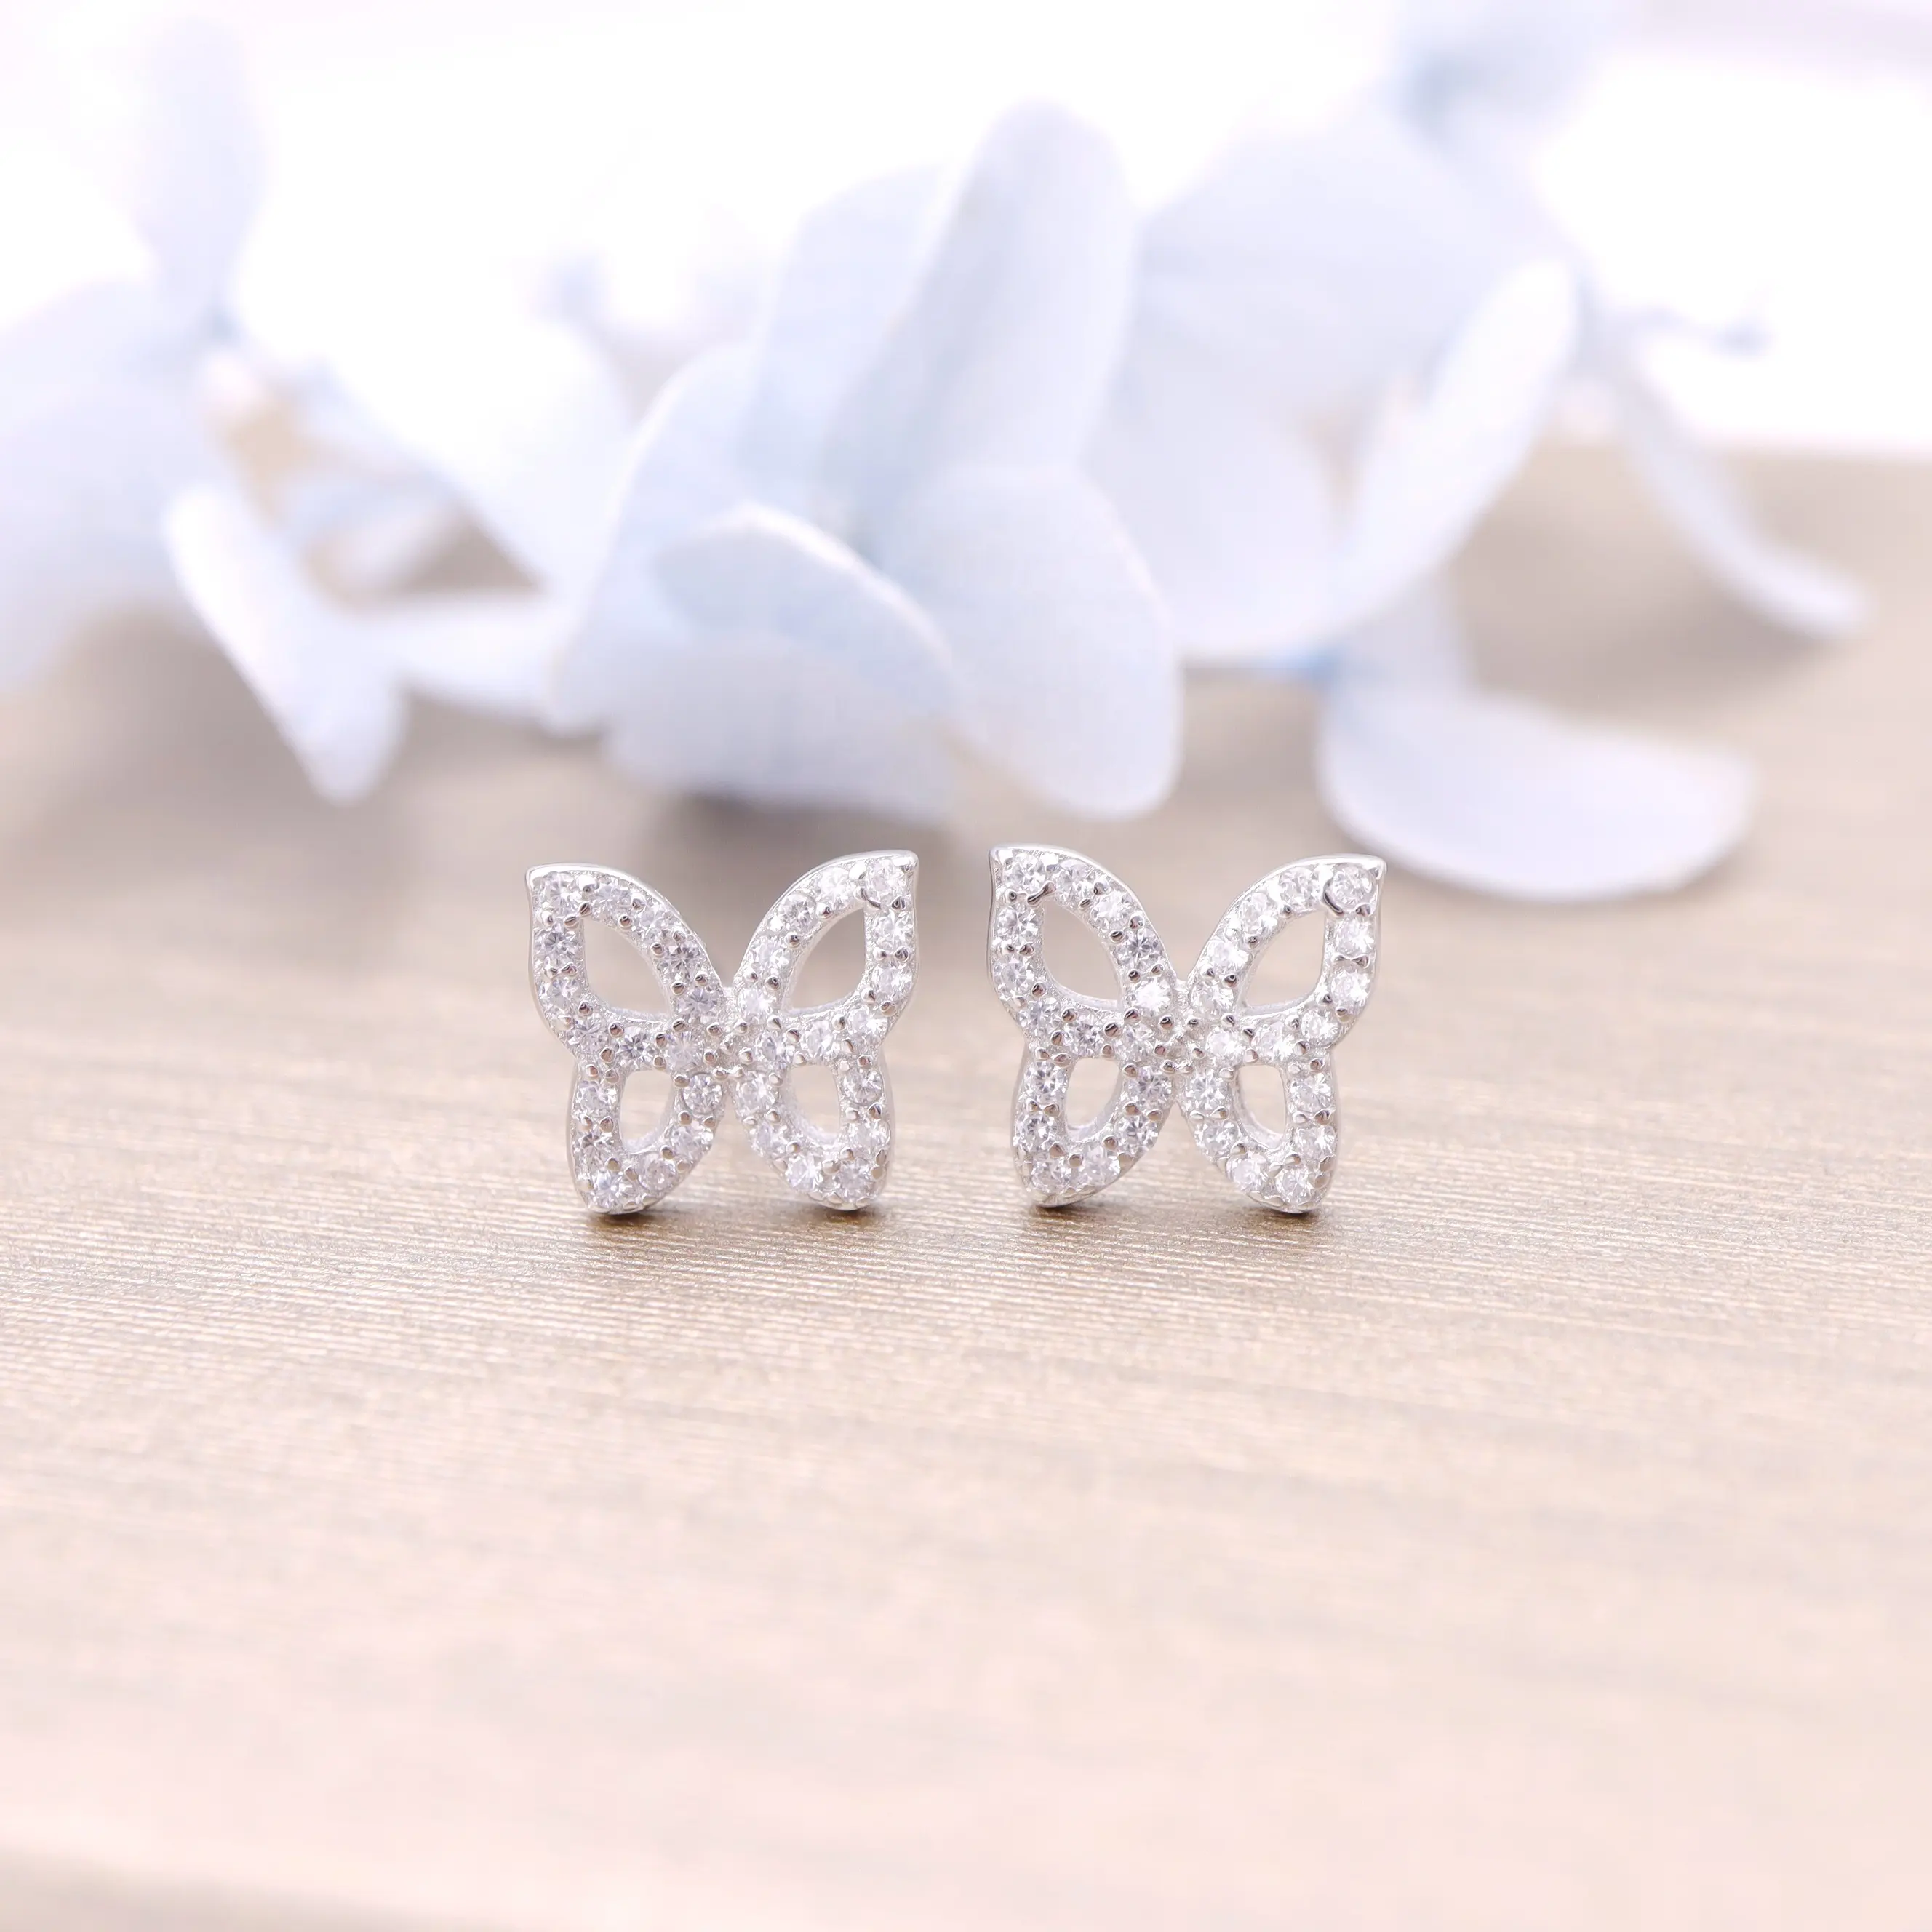 SayYes 925 Sterling Silver Jewelry Cubic Zirconia Butterfly Stud Earrings Rhodium Plated For Women